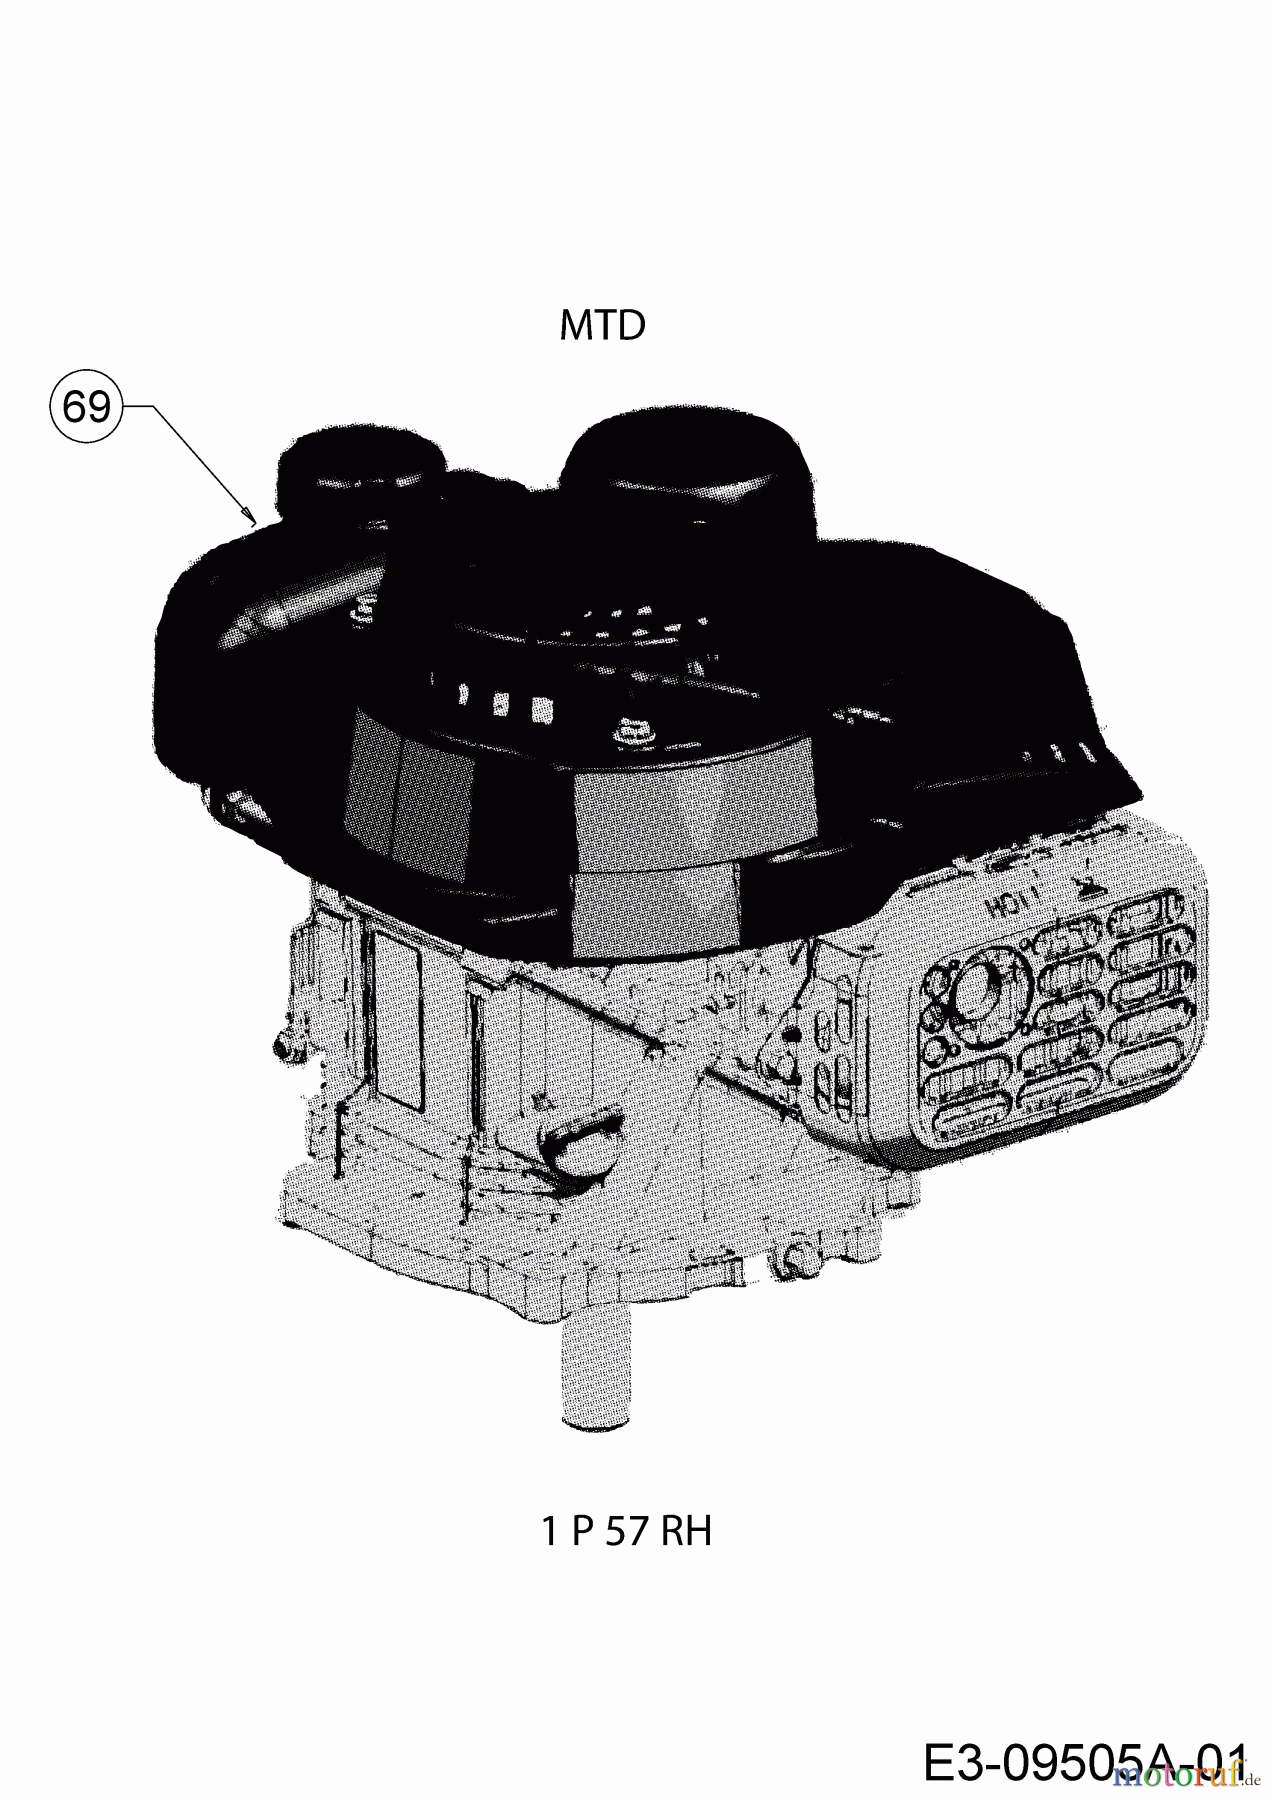  MTD Petrol mower Smart G 46 MO 11E-70SJ600 (2020) Engine MTD